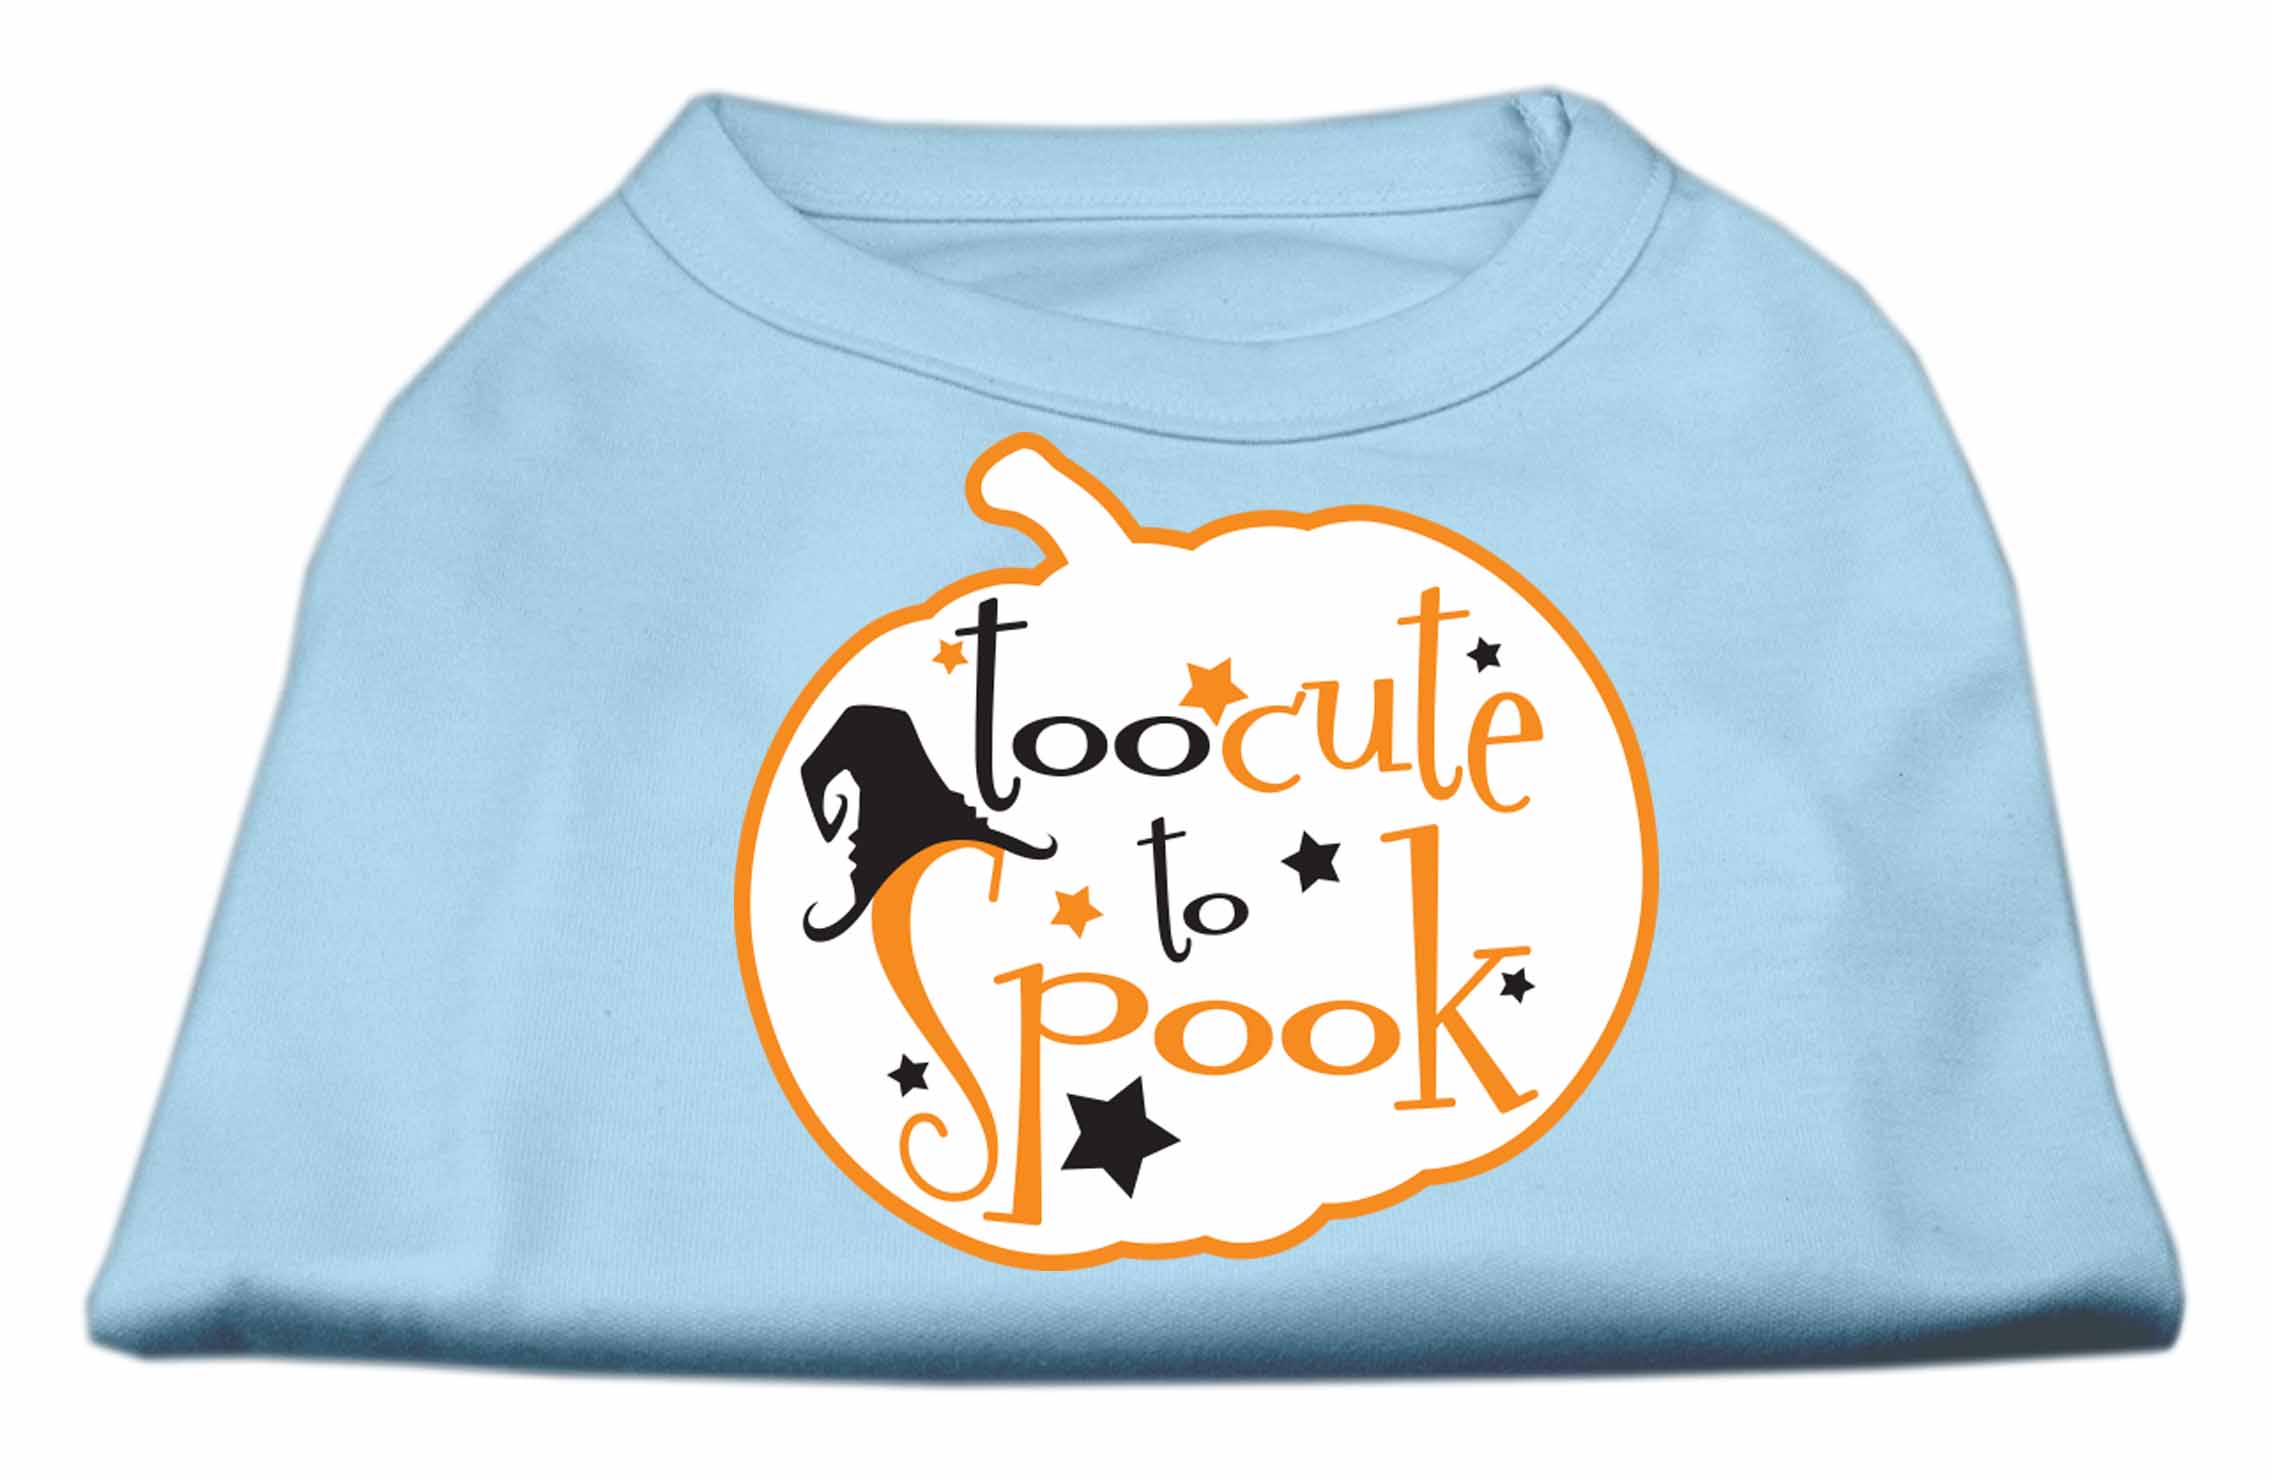 Too Cute to Spook Screen Print Dog Shirt Baby Blue Lg